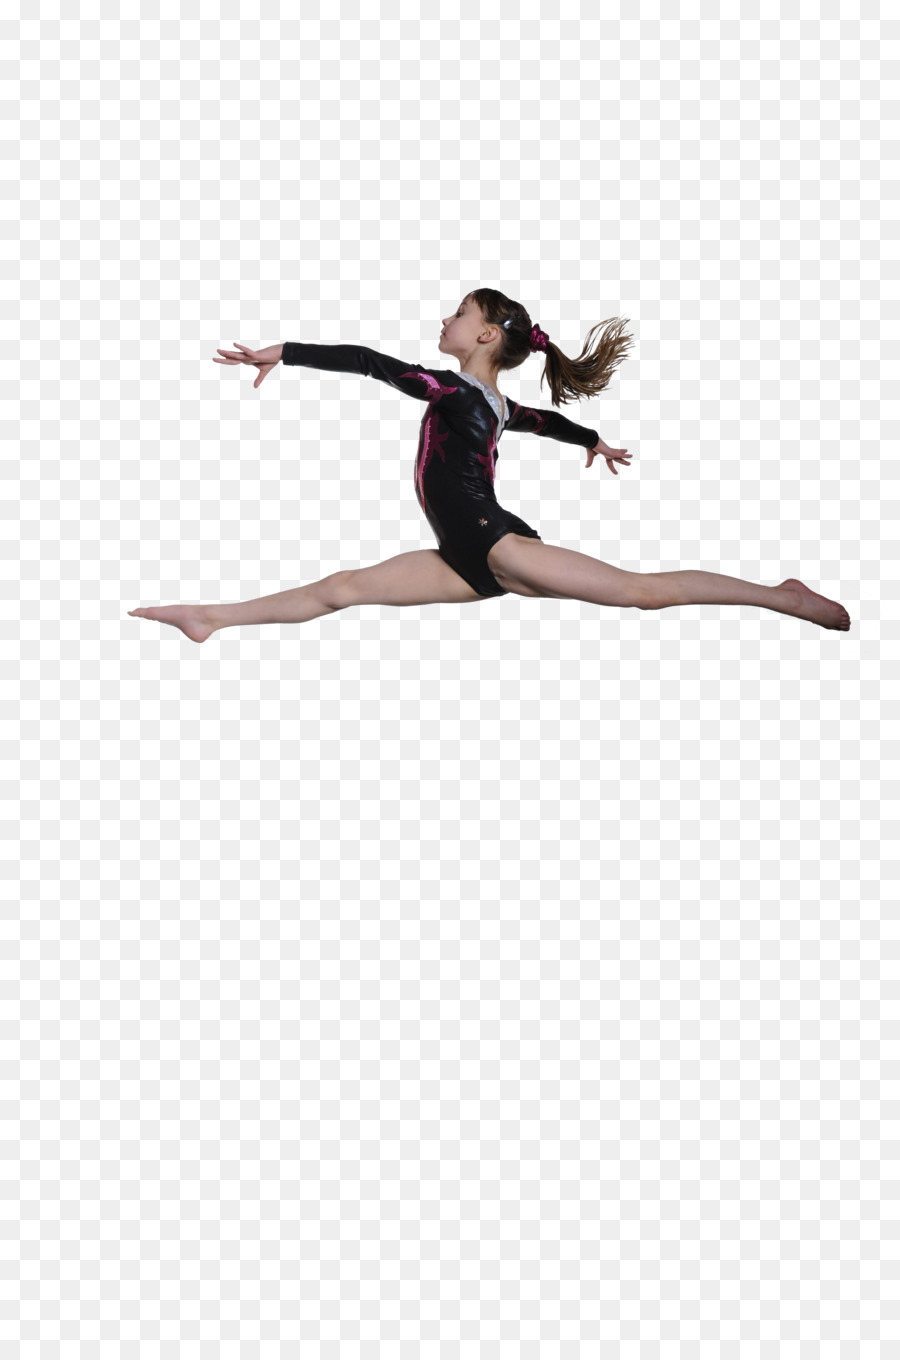 Clinton Gymnastics Academy Contortion Turners Dance - gymnastics png download - 2832*4256 - Free Transparent Gymnastics png Download.